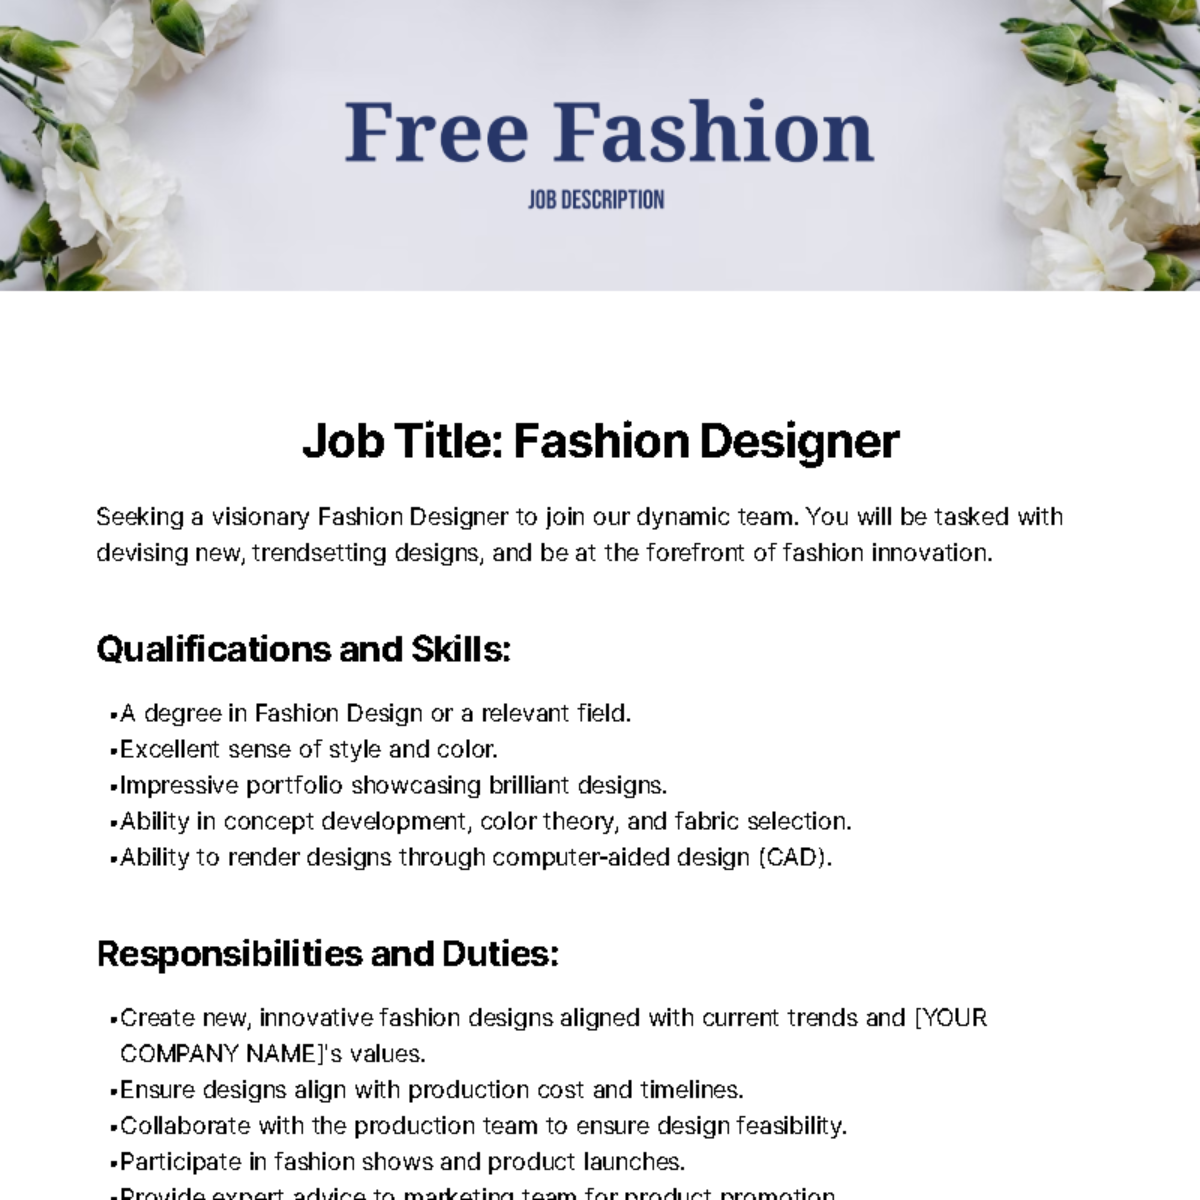 Free Fashion Job Description Template